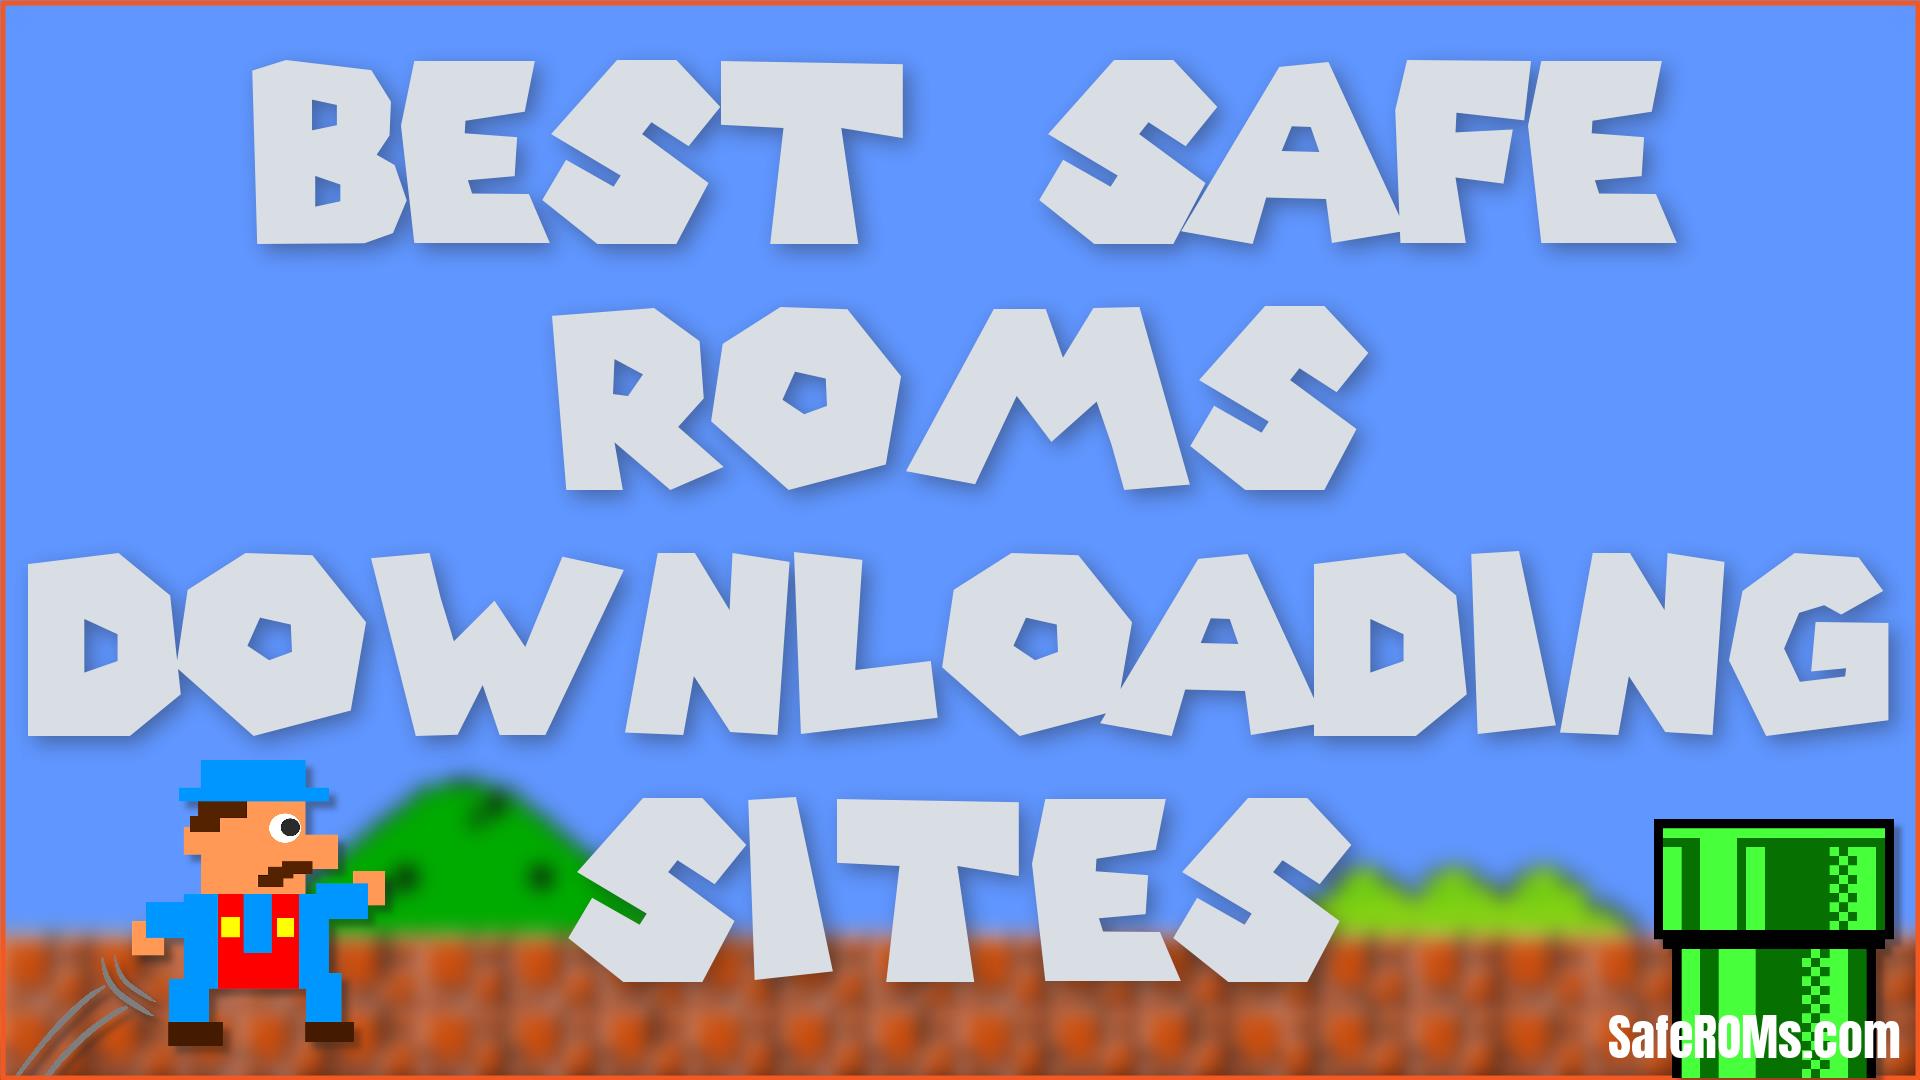 SafeROMs — Top 50 Best Safe ROMs Sites (2021)